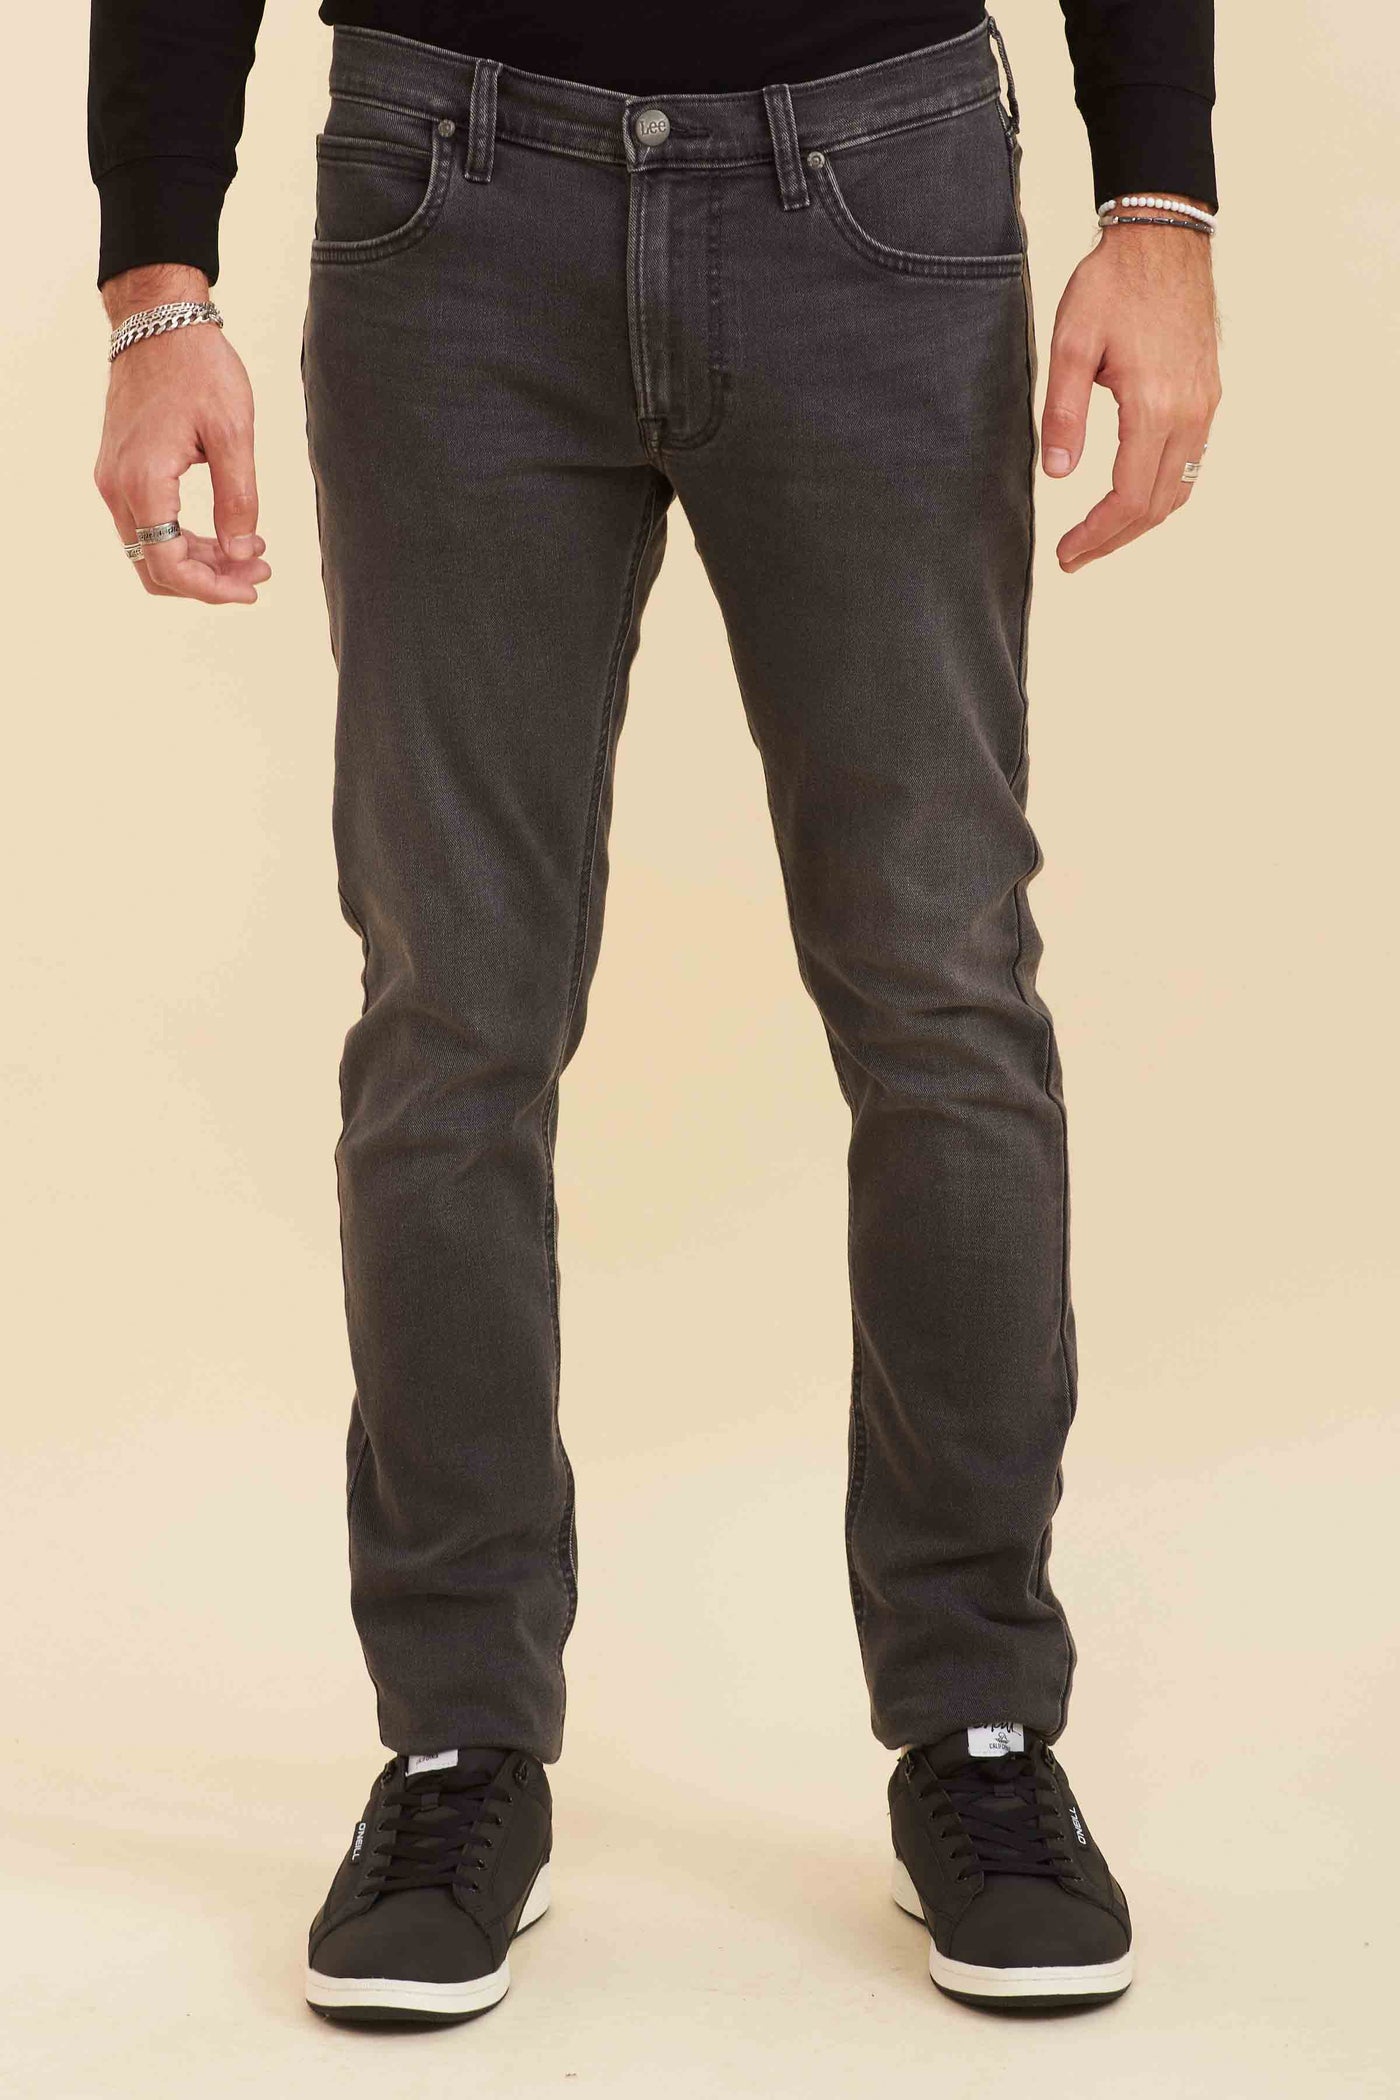 מכנס ג'ינס סלים בצבע אפור